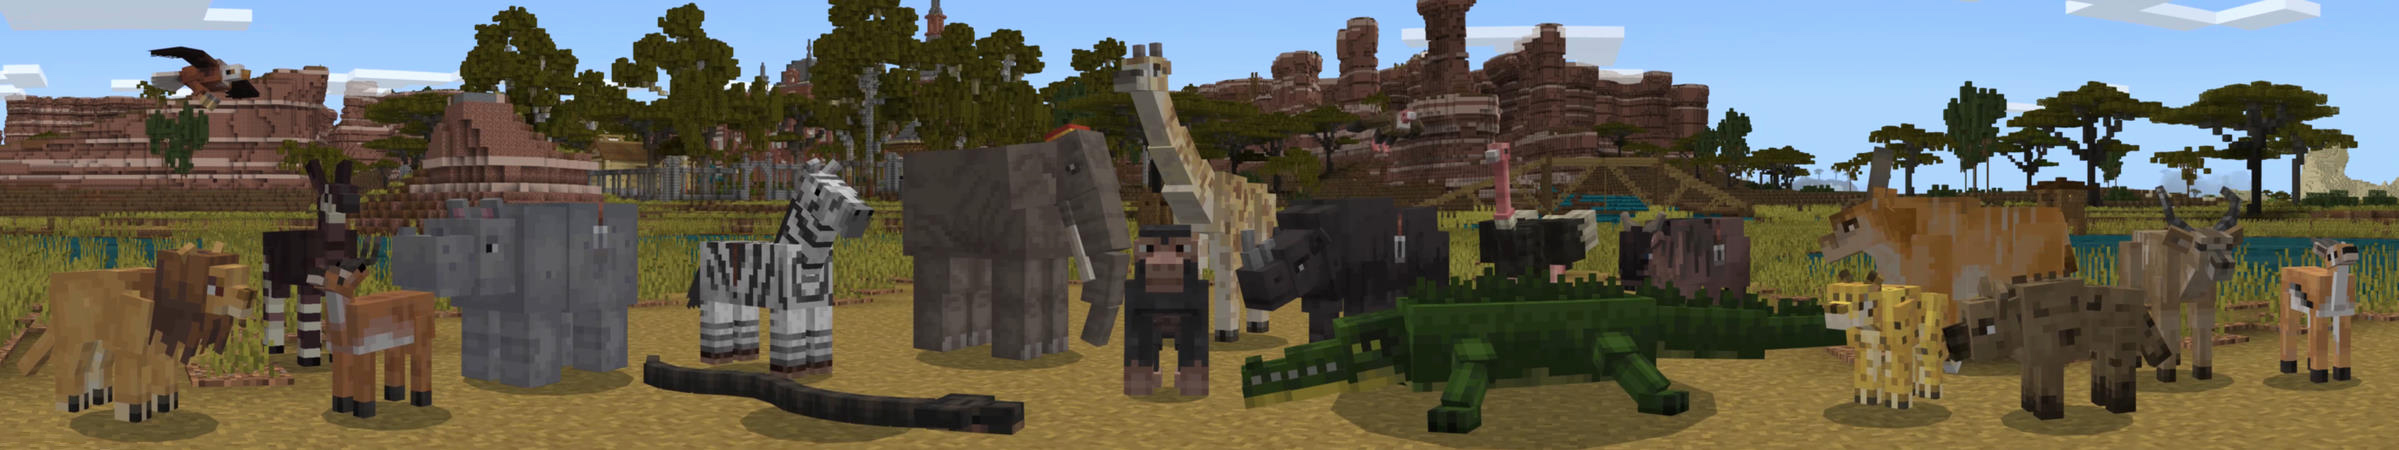 Safari Animals in Minecraft Marketplace | Minecraft